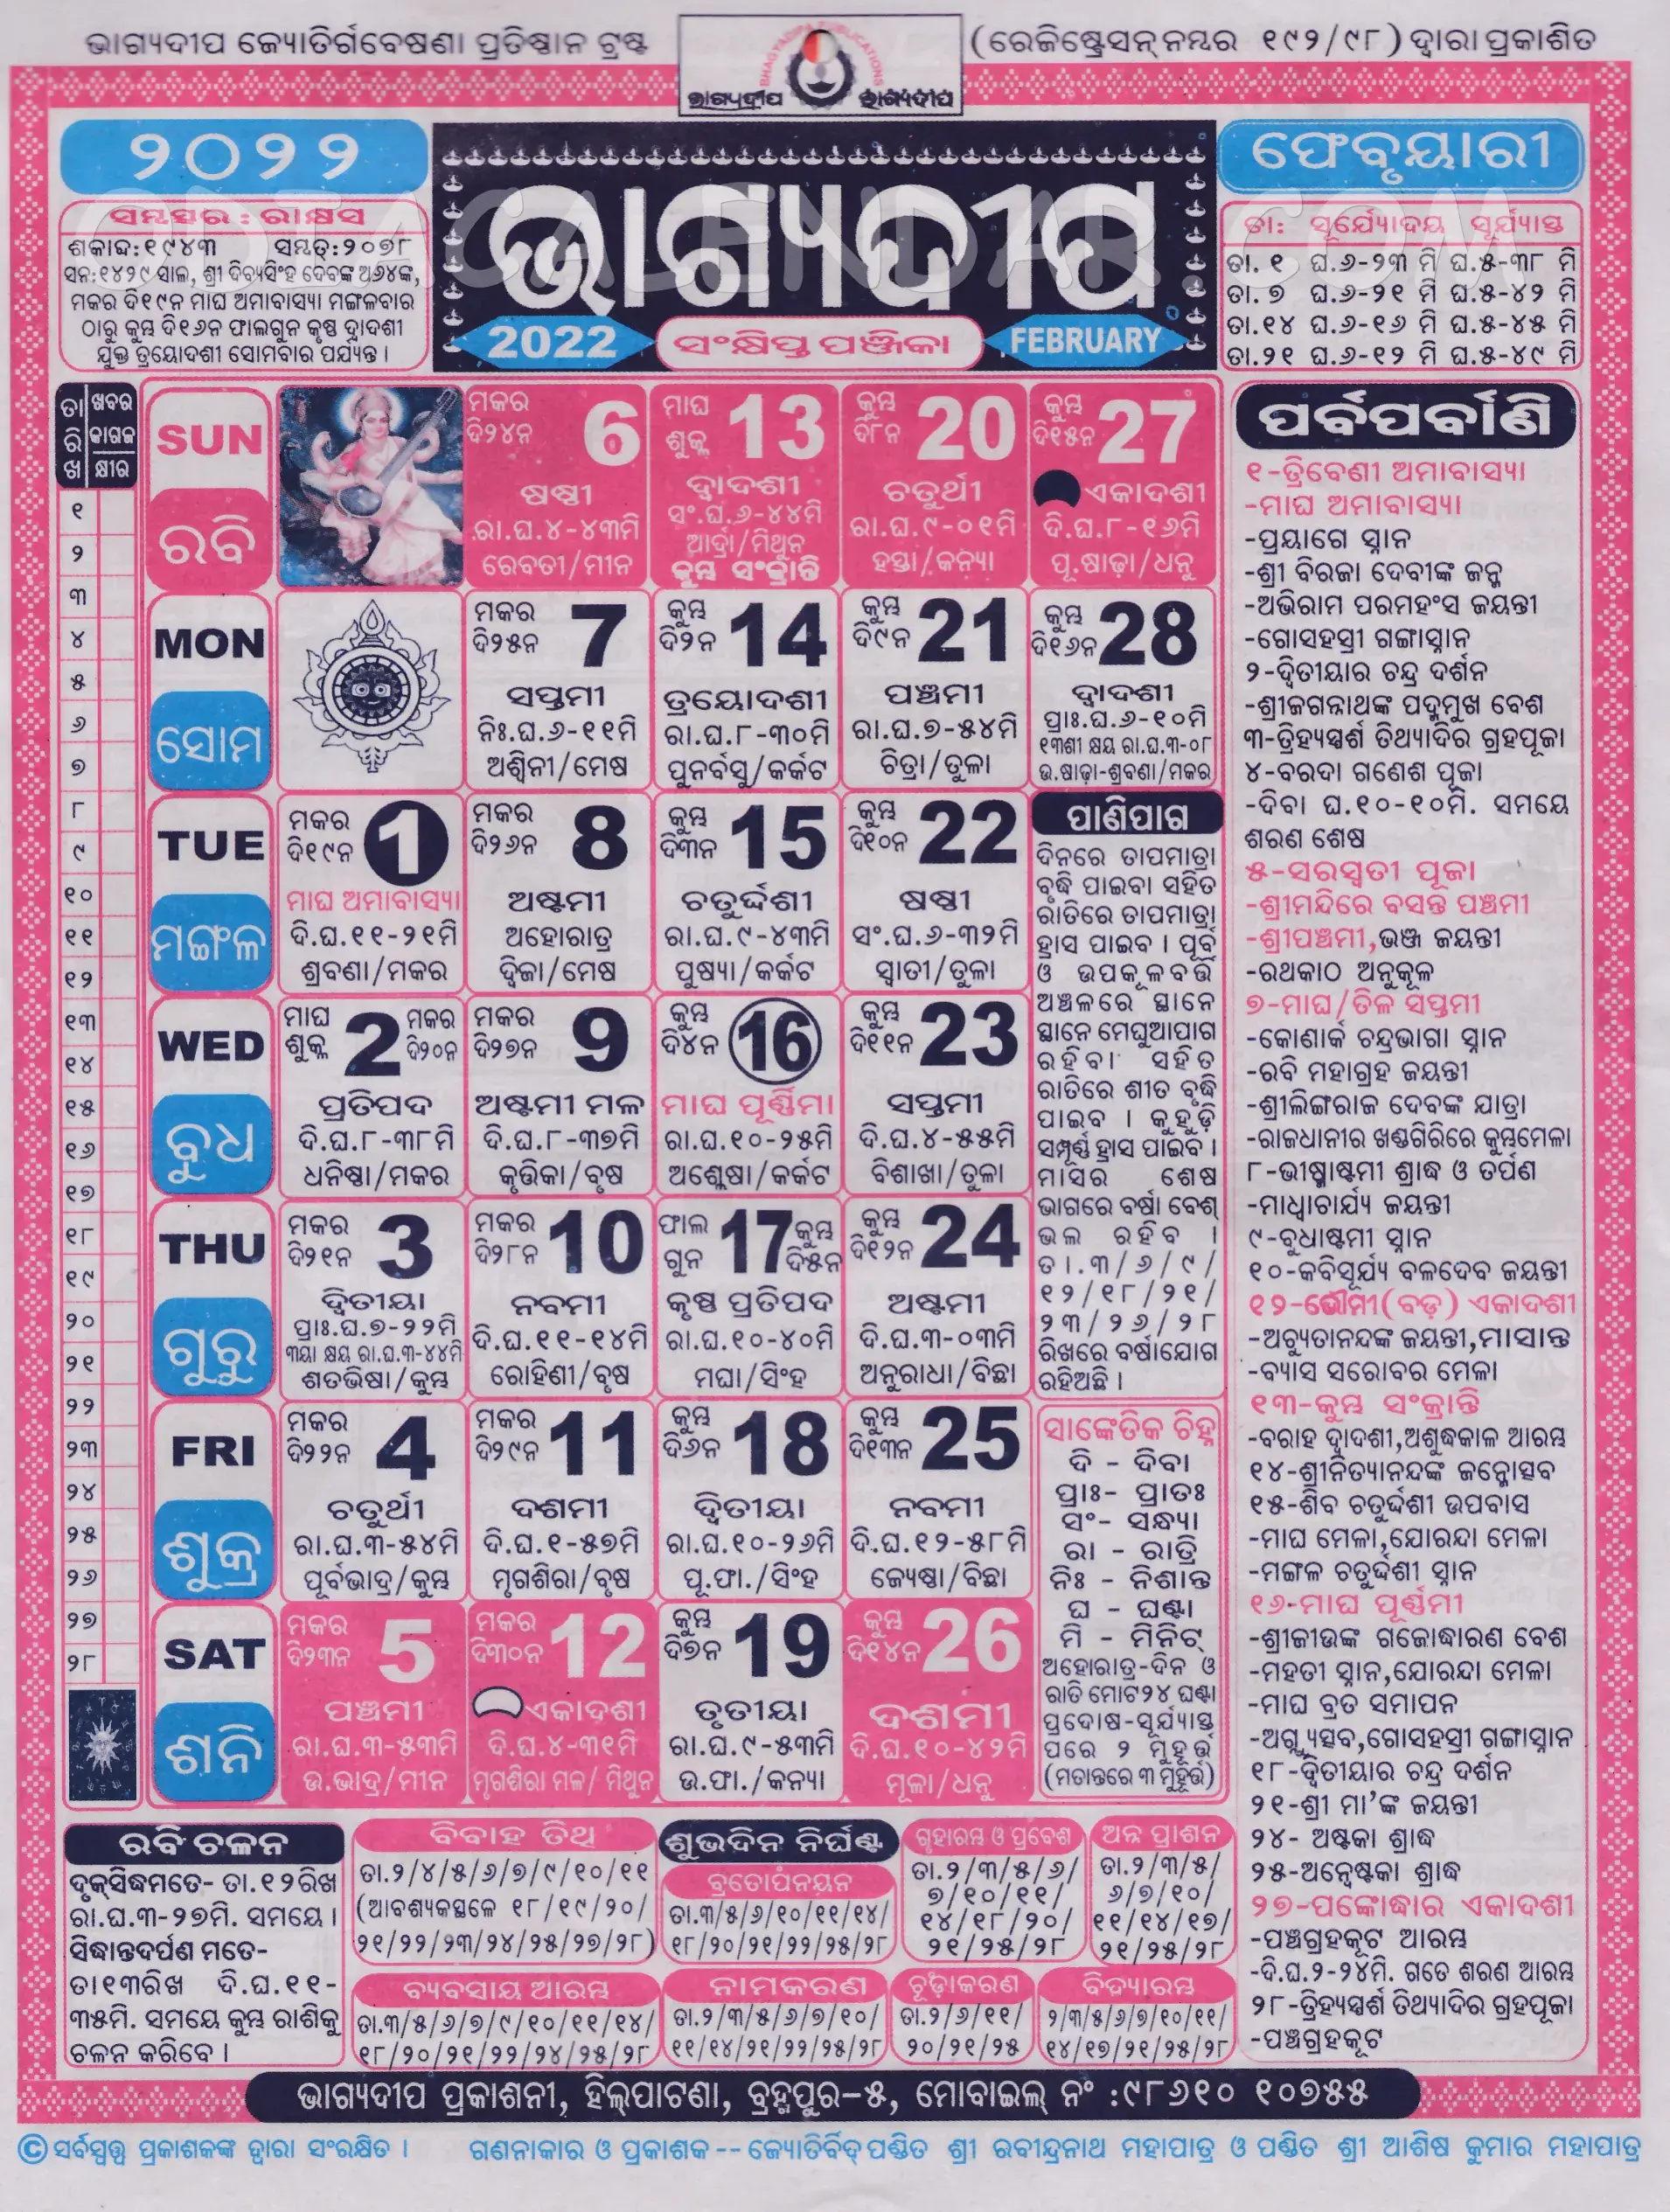 bhagyadeep calendar february 2022